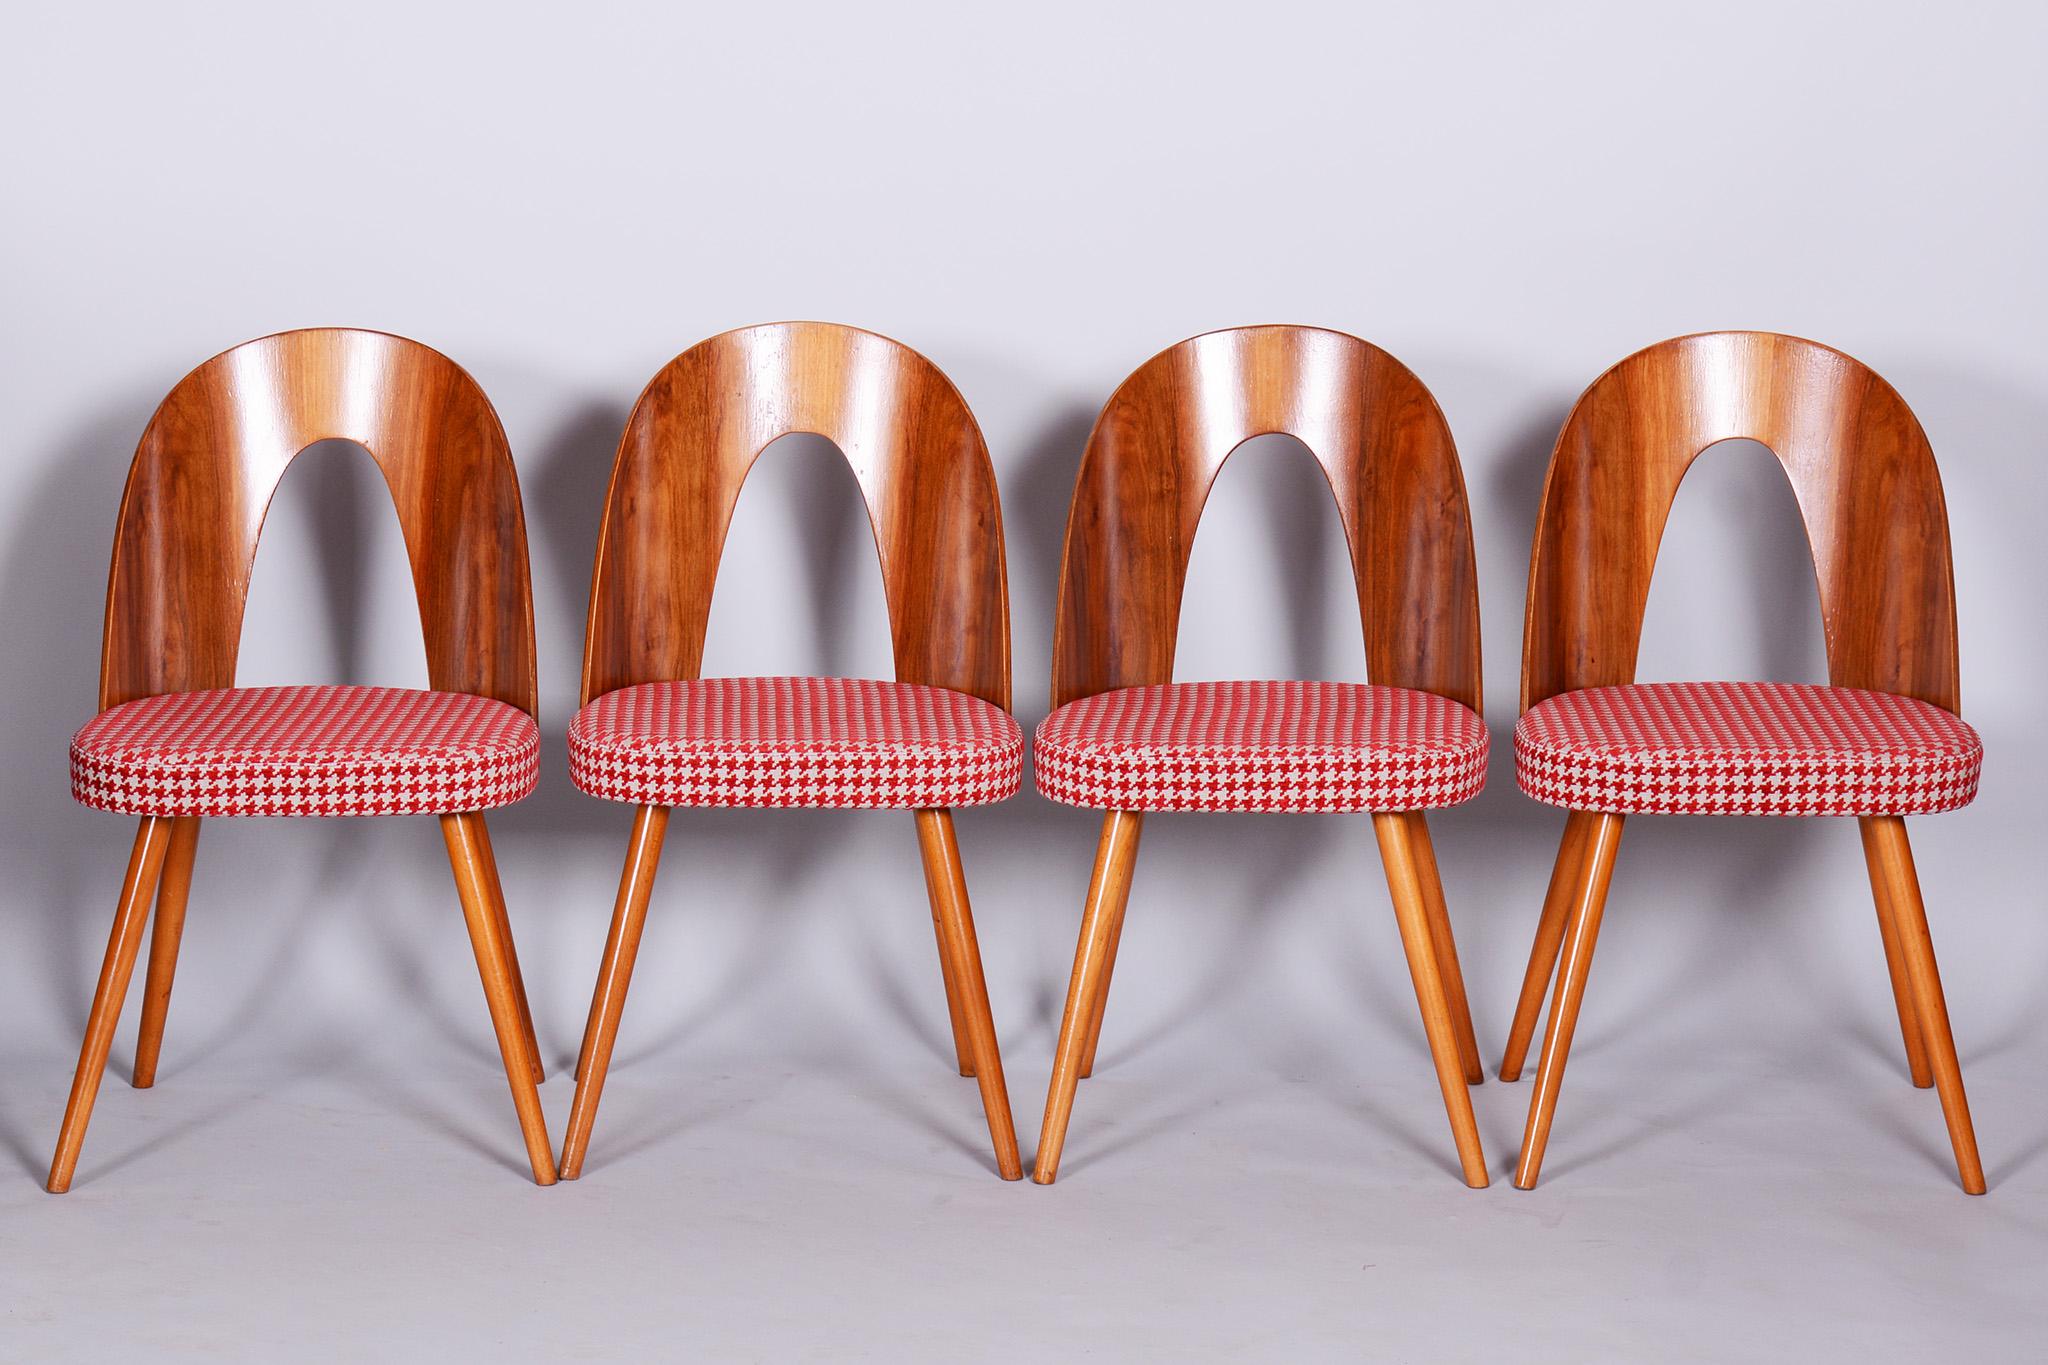 Four Restored Midcentury Chairs, Antonin Suman, Beech, Walnut, Czechia, 1950s For Sale 5